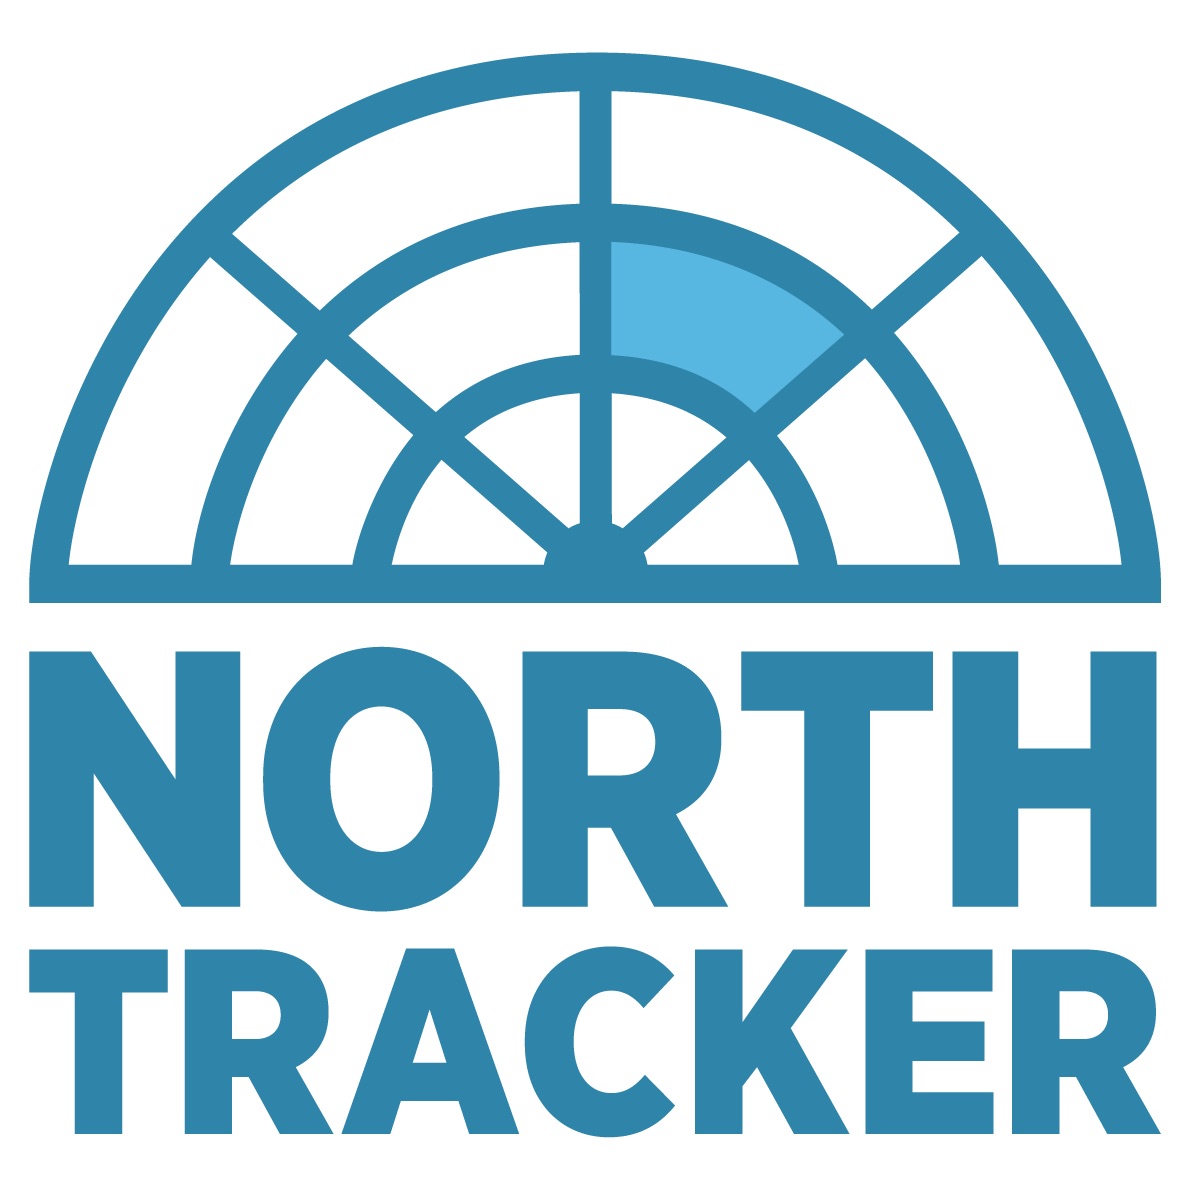 NORTH TRACKER